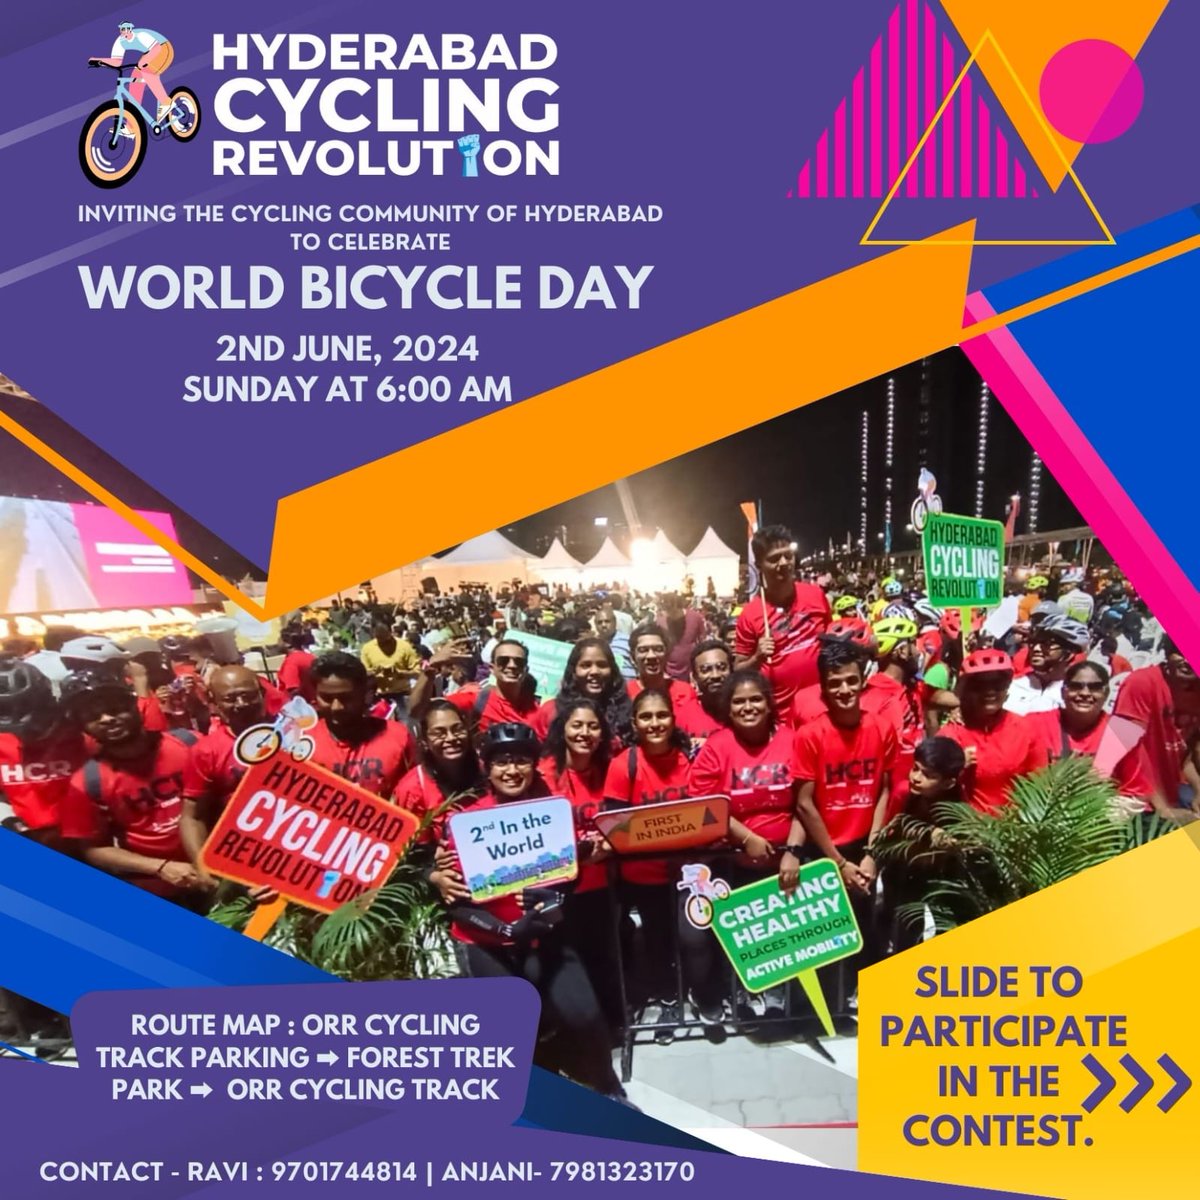 #HyderabadCyclingRevolution inviting the cycling Community of Hyderabad to celebrate #WorldBicycleDay 2024 at @HydCyclingTrack @healthway11023 @md_hgcl @BicyclingNewsIn @TelanganaCMO @ErikSolheim @sselvan @SarikaPanda @DrBhairrviJoshi @Anjani_Tsn @manreddy @modacitylife